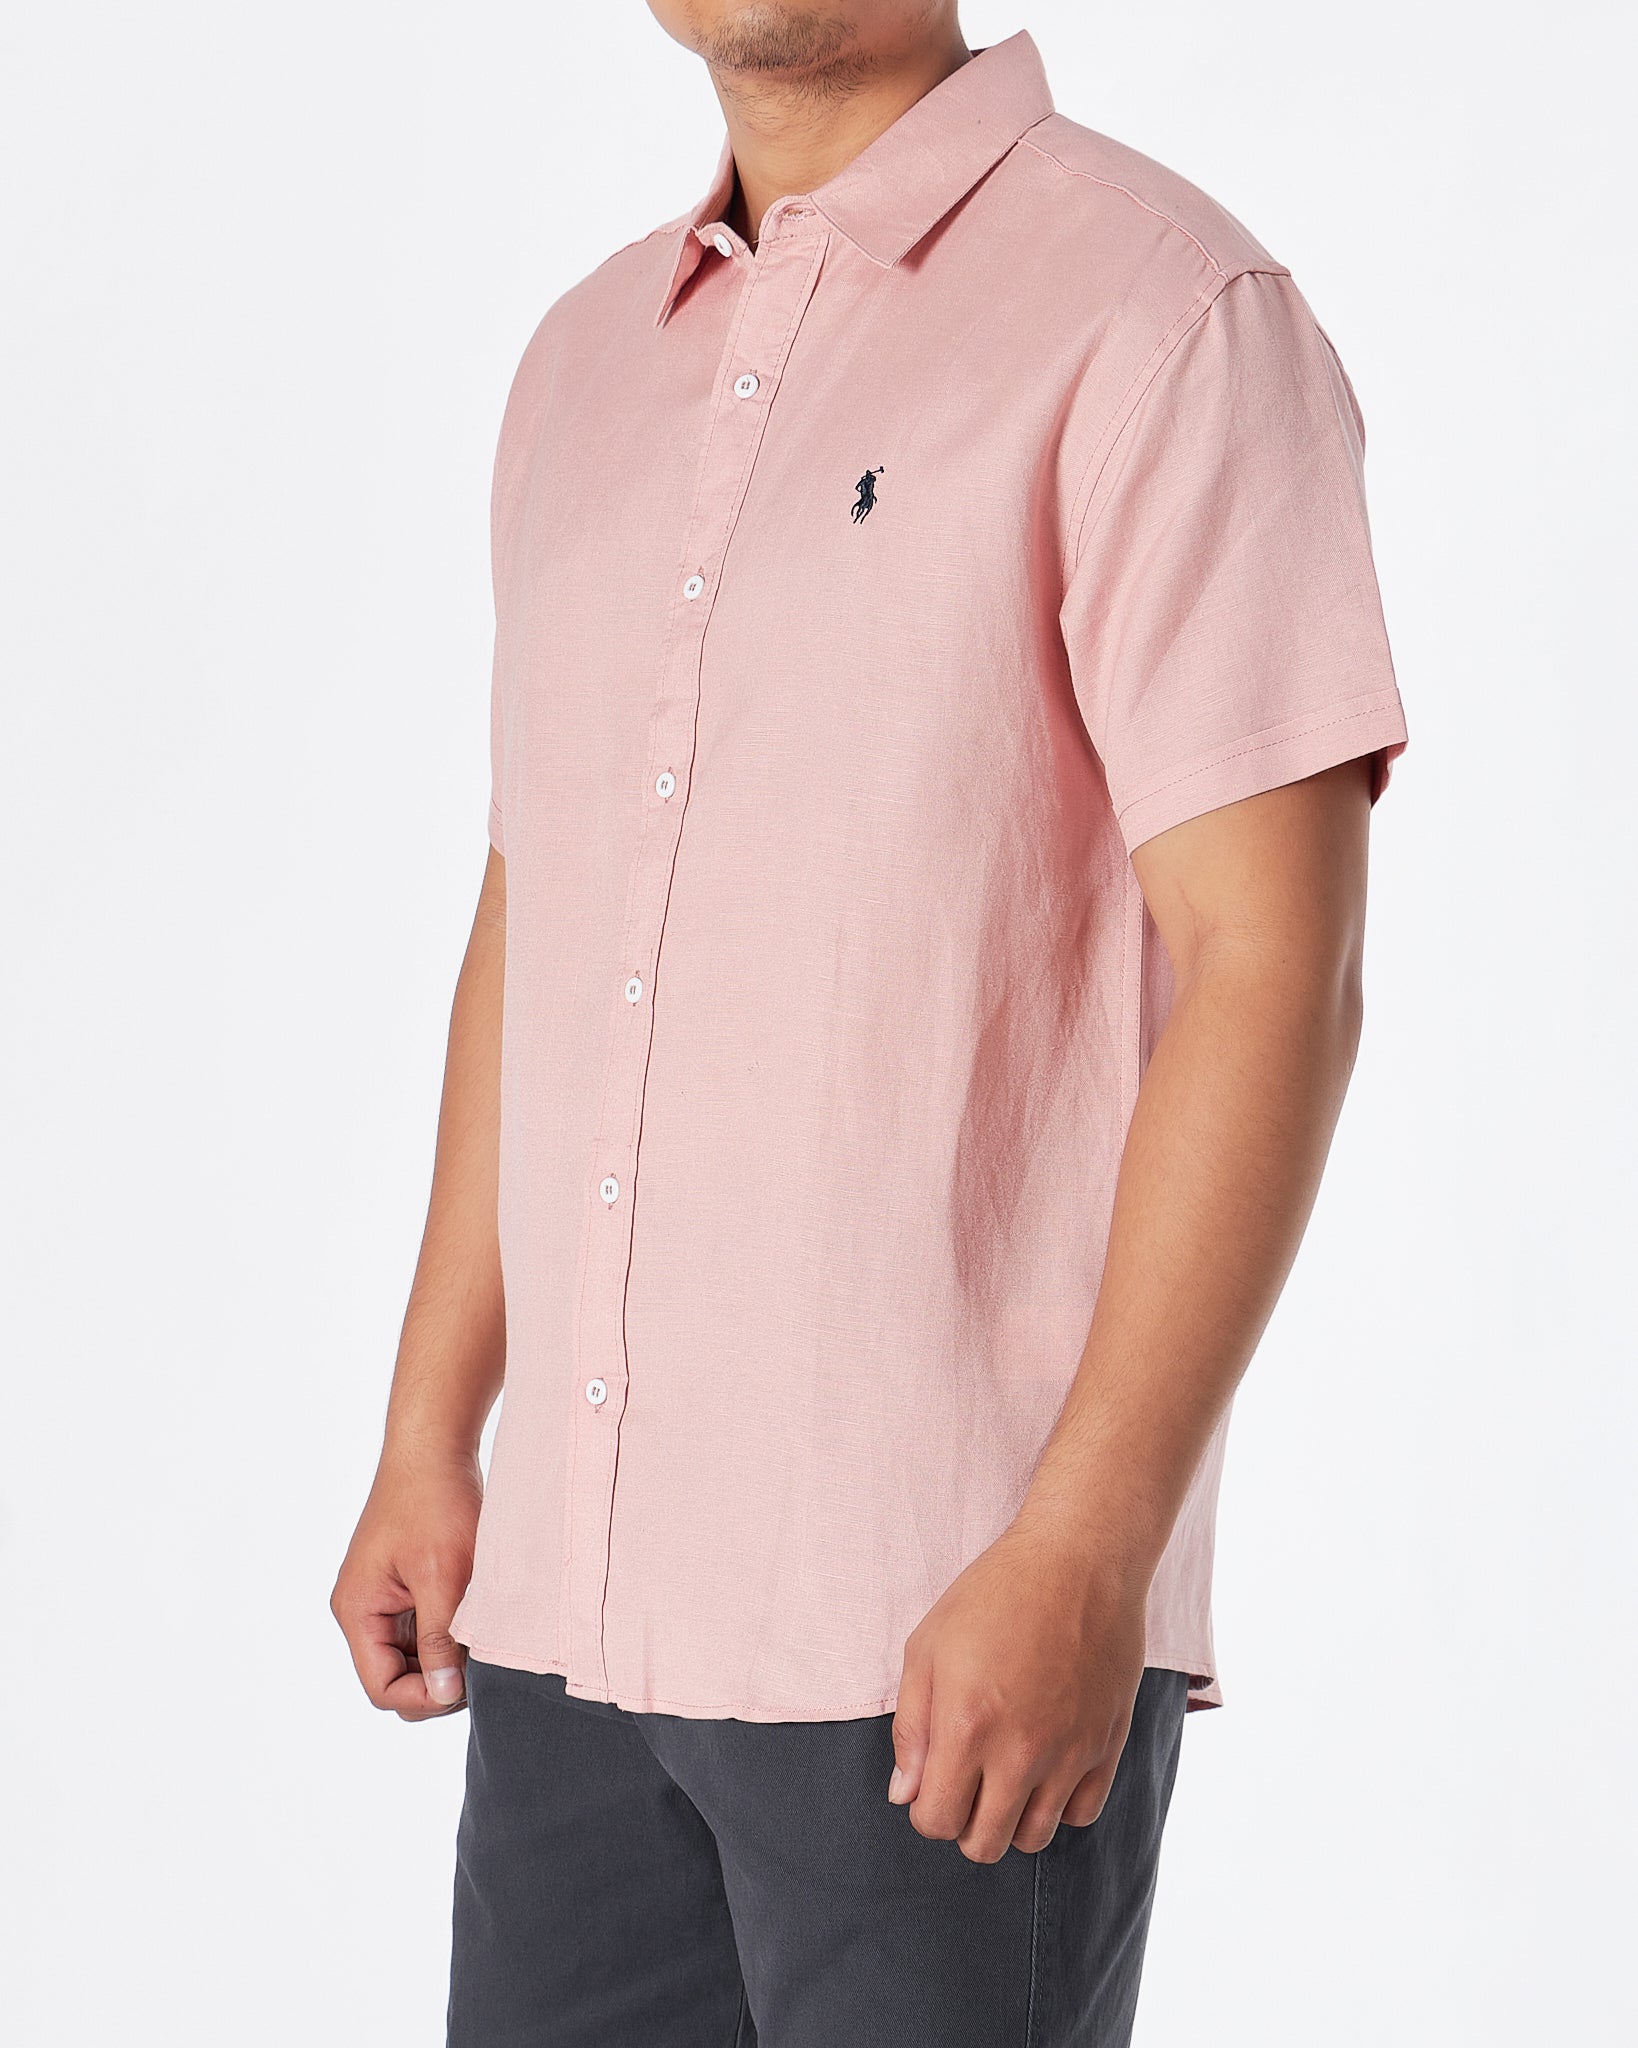 RL Cotton Men Pink Shirts Short Sleeve 28.90